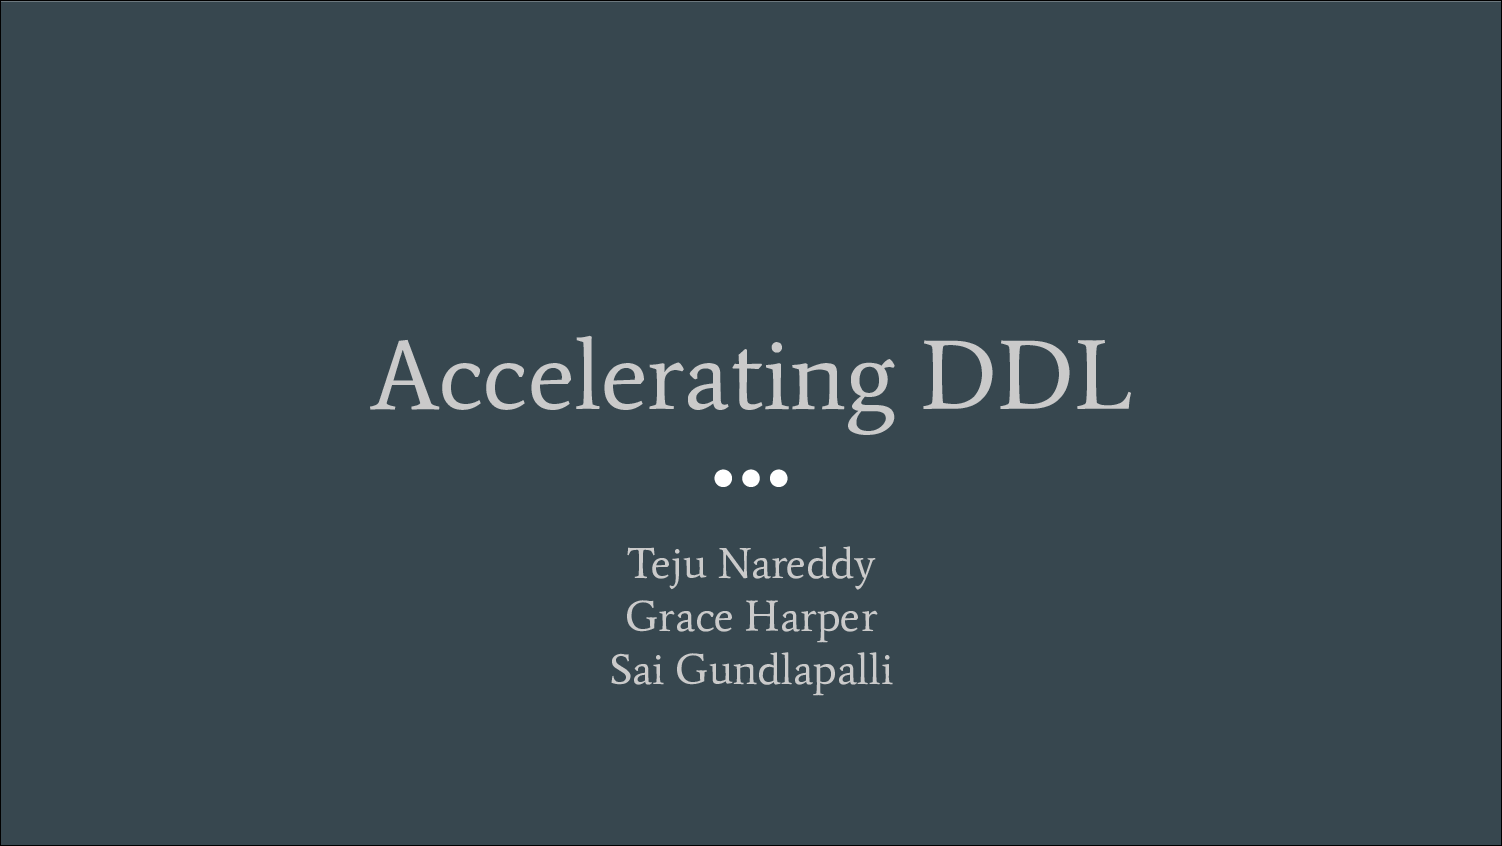 [PRESENTATION] Accelerating DDL Operations